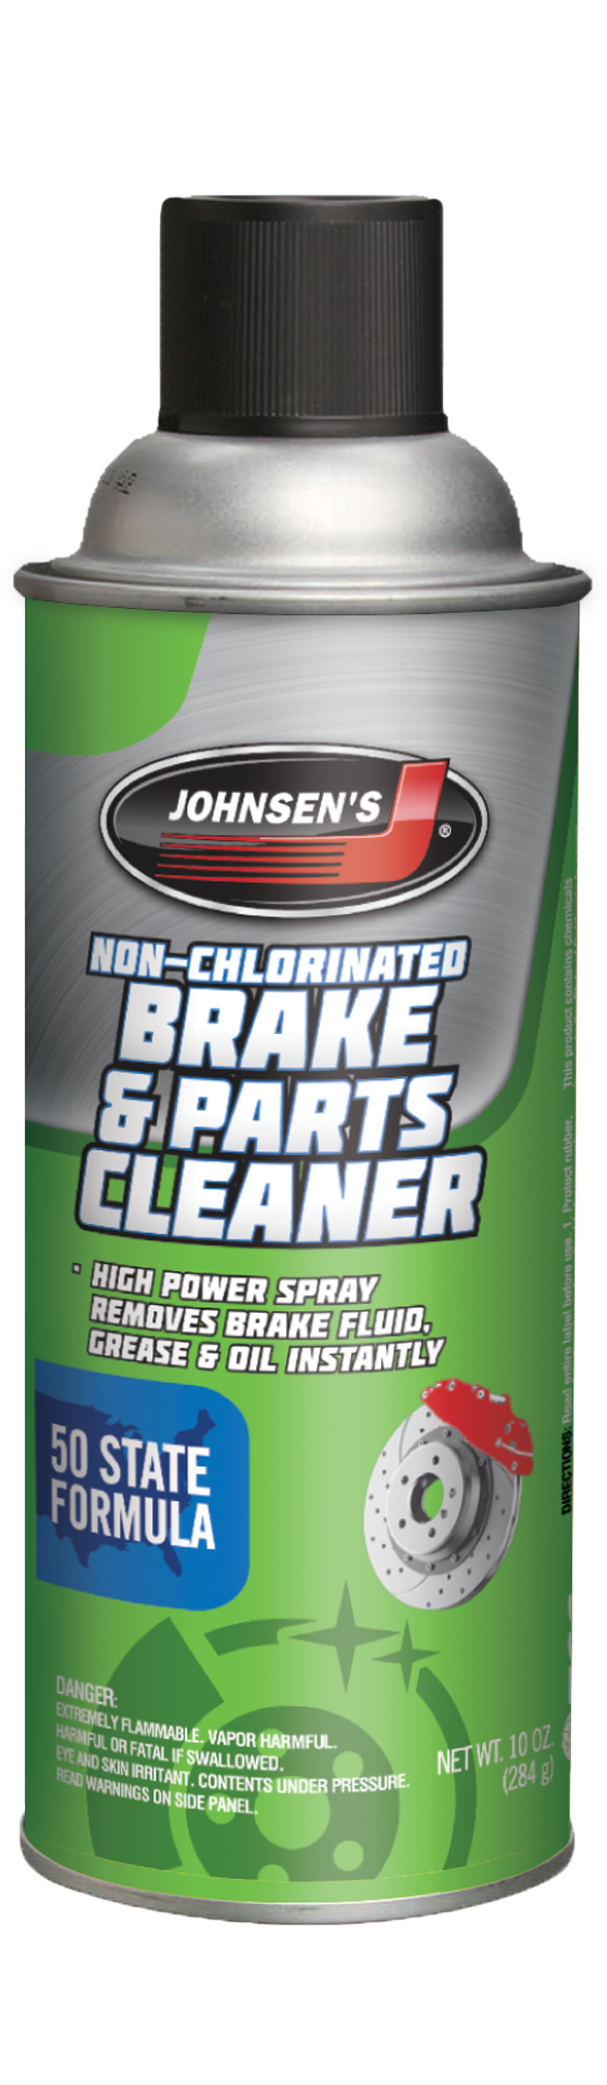 Johnsen's NonChlorinated Brake Cleaner - 55 Gallon - Brake & Carb